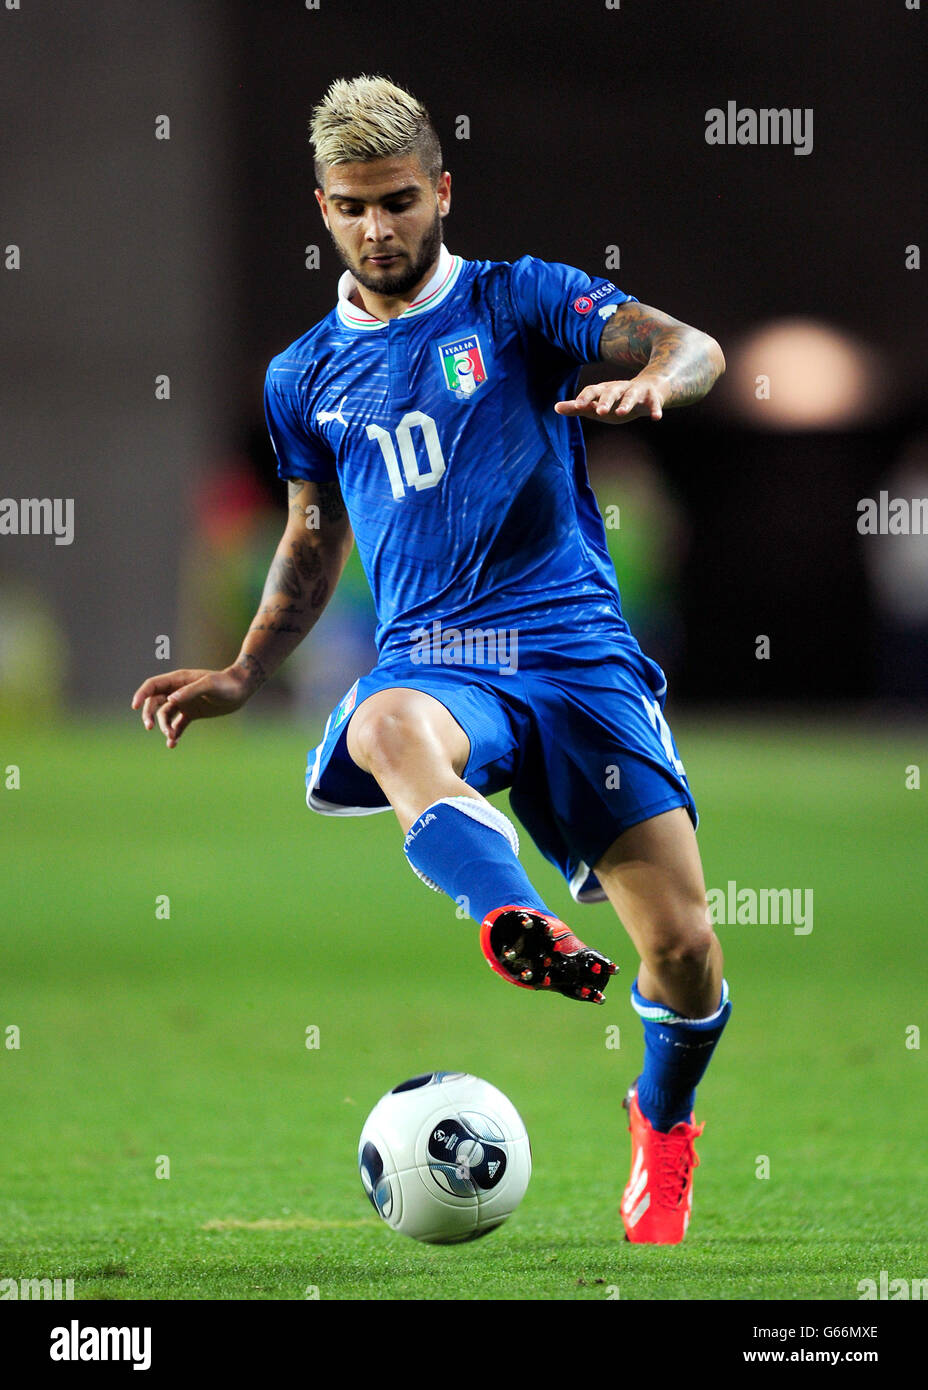 Soccer - UEFA European Under 21 Championship 2013 - Semi Final - Italy v Netherlands - Petach Tikva. Lorenzo Insigne, Italy Stock Photo